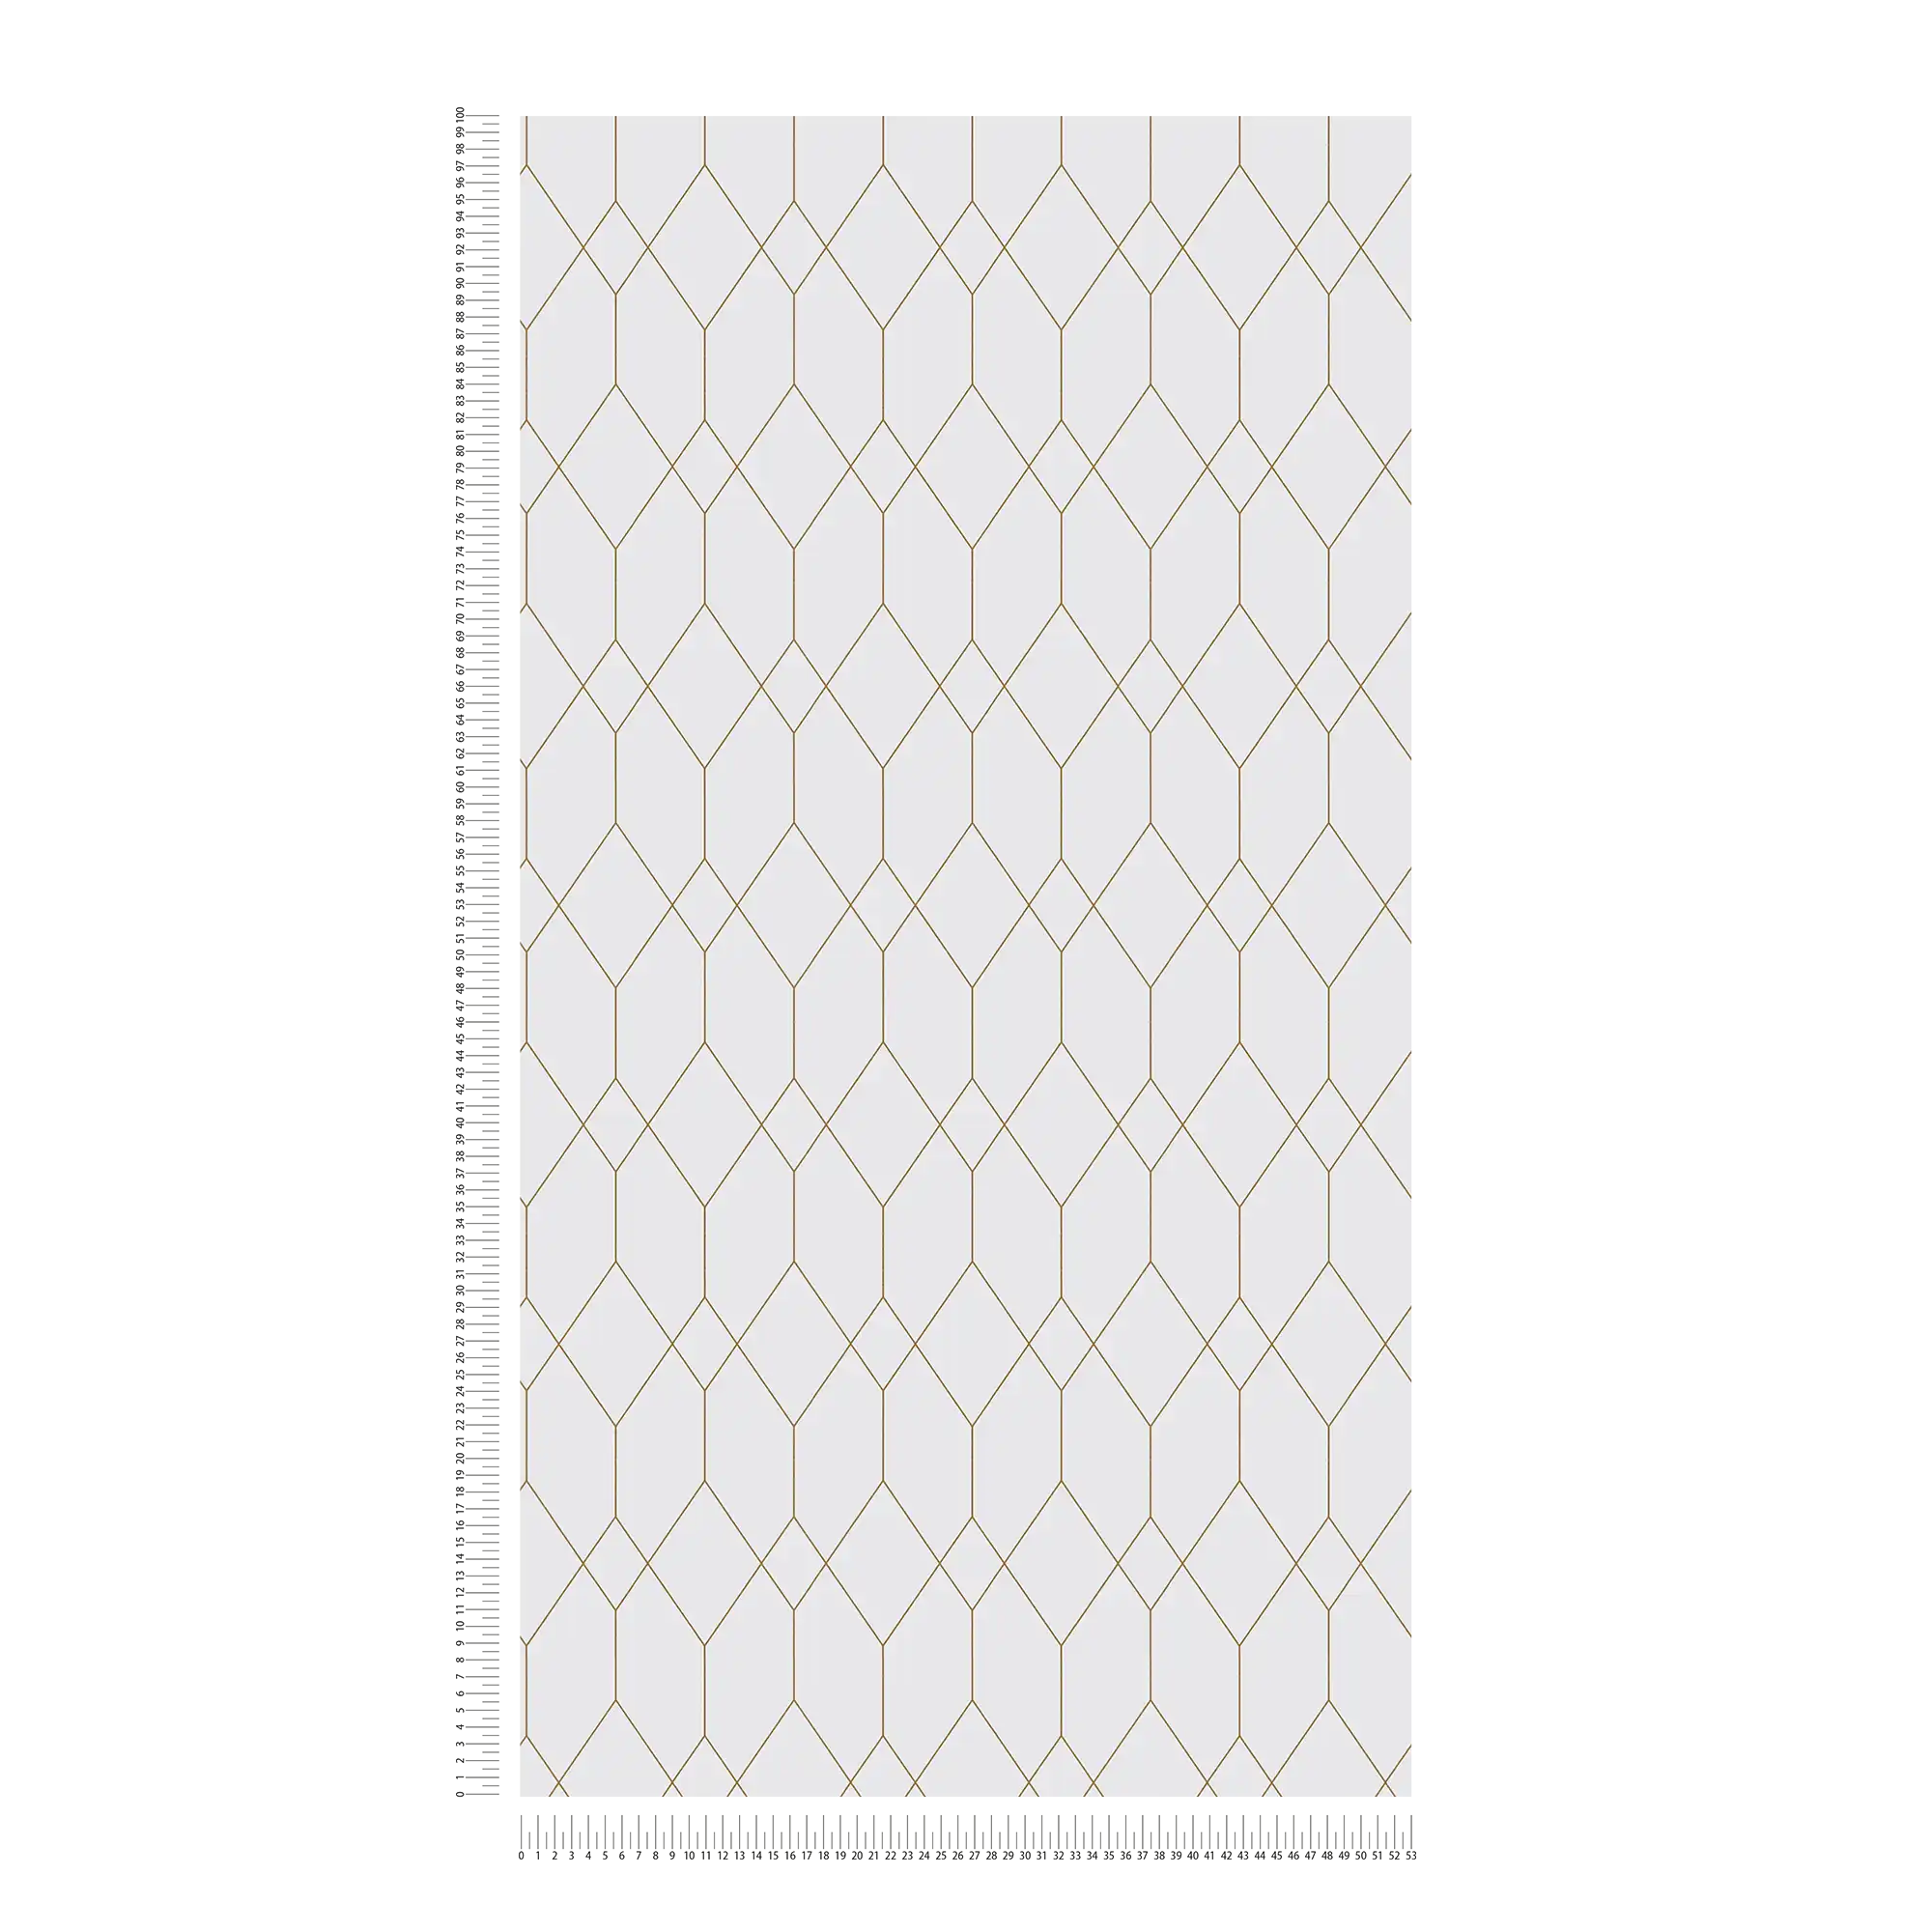             Self-adhesive wallpaper | Geometric line pattern in gold - white, metallic
        